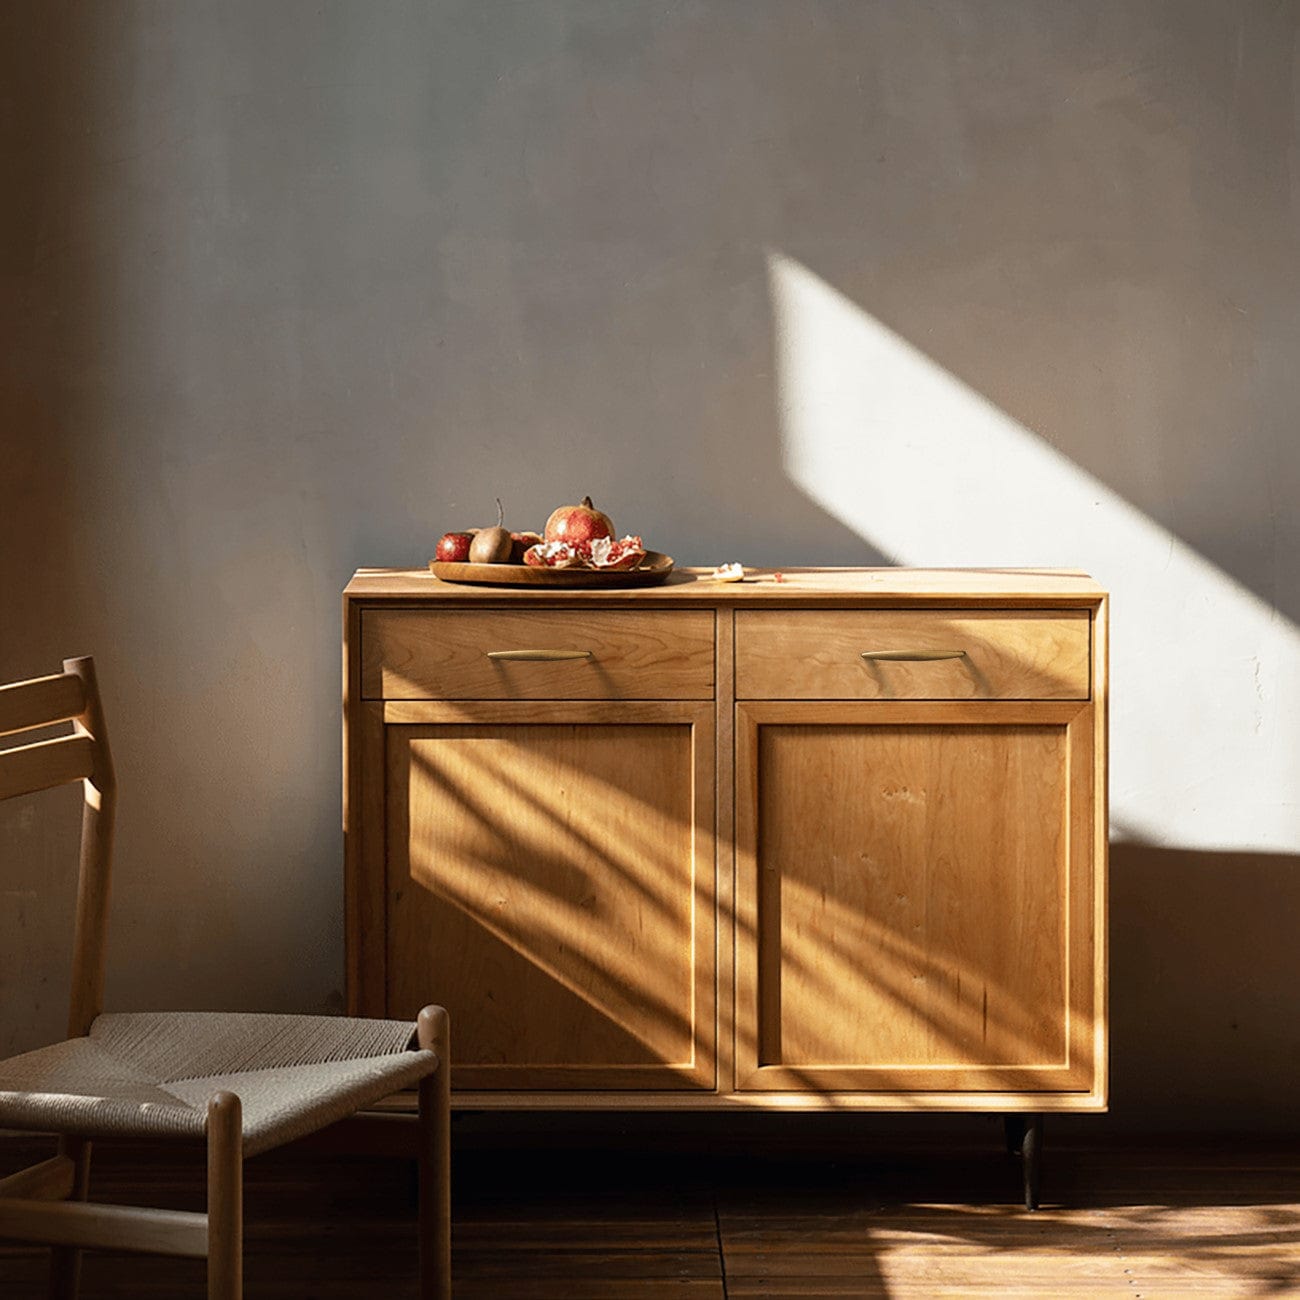 Goo-Ki Antique Brass Cabinet Handles Timeless Drawer Pulls for Classic Furniture Revival